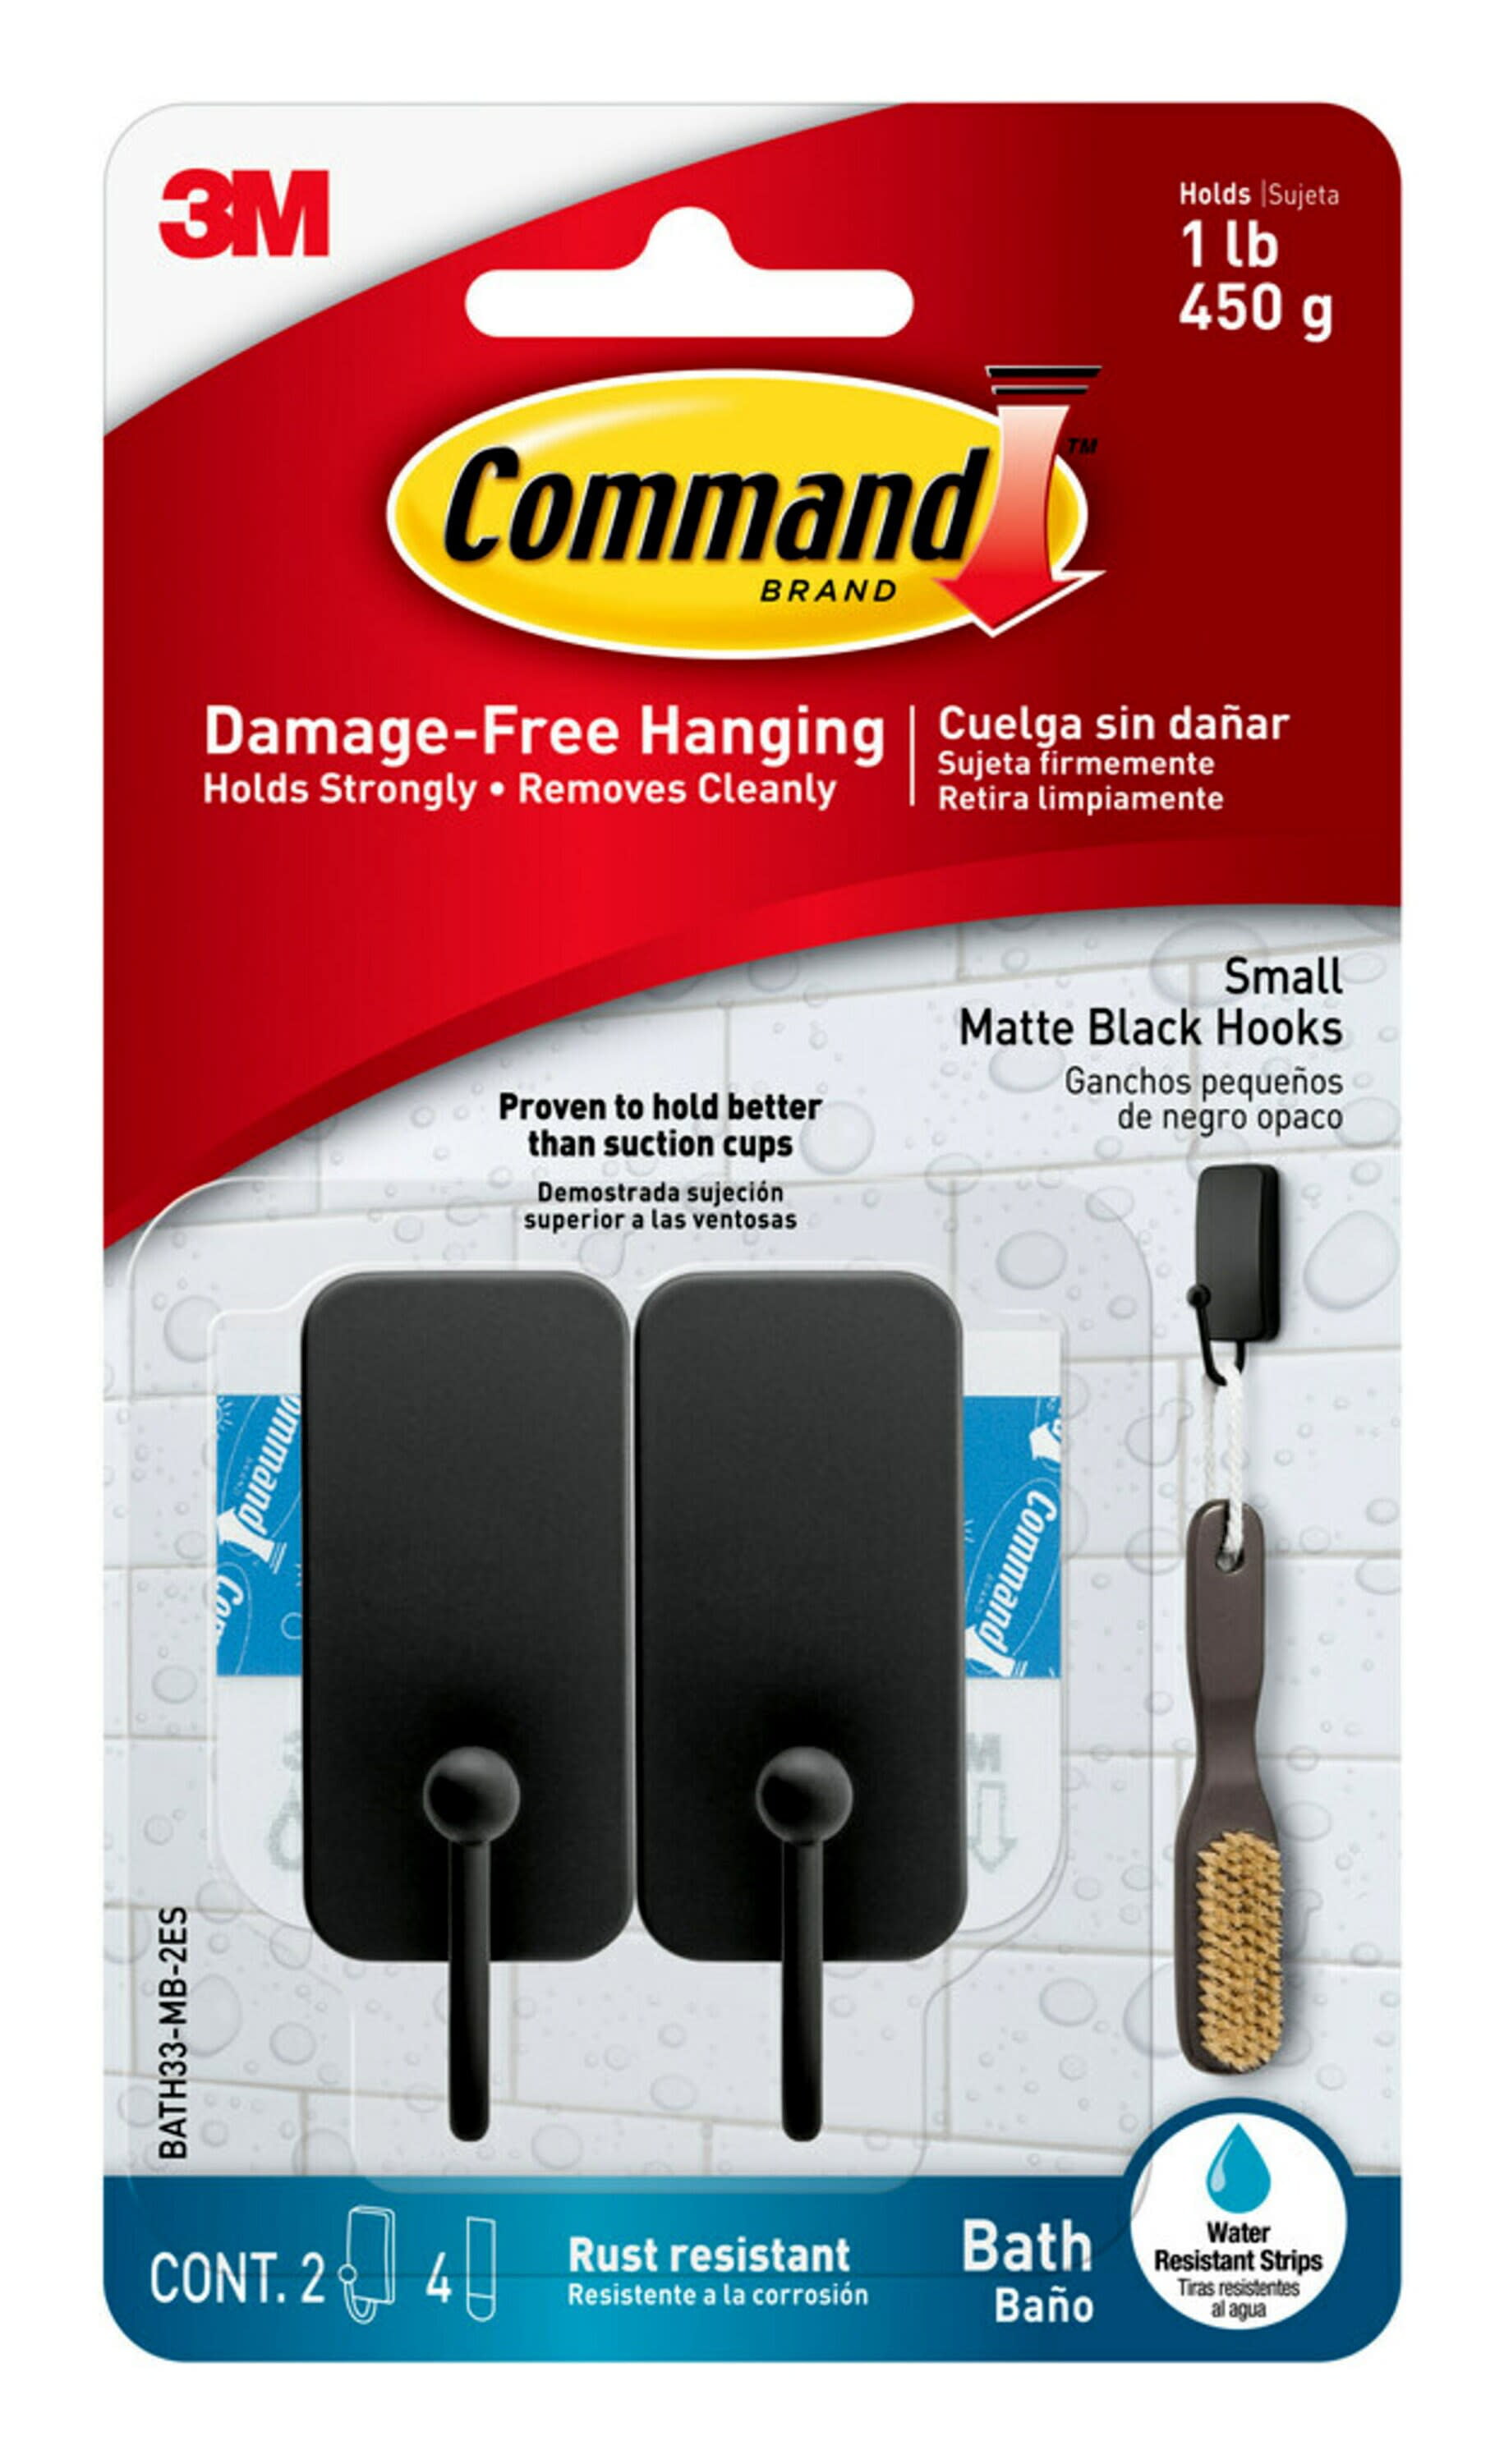 Command Small Matte Black Hooks - 4 ct